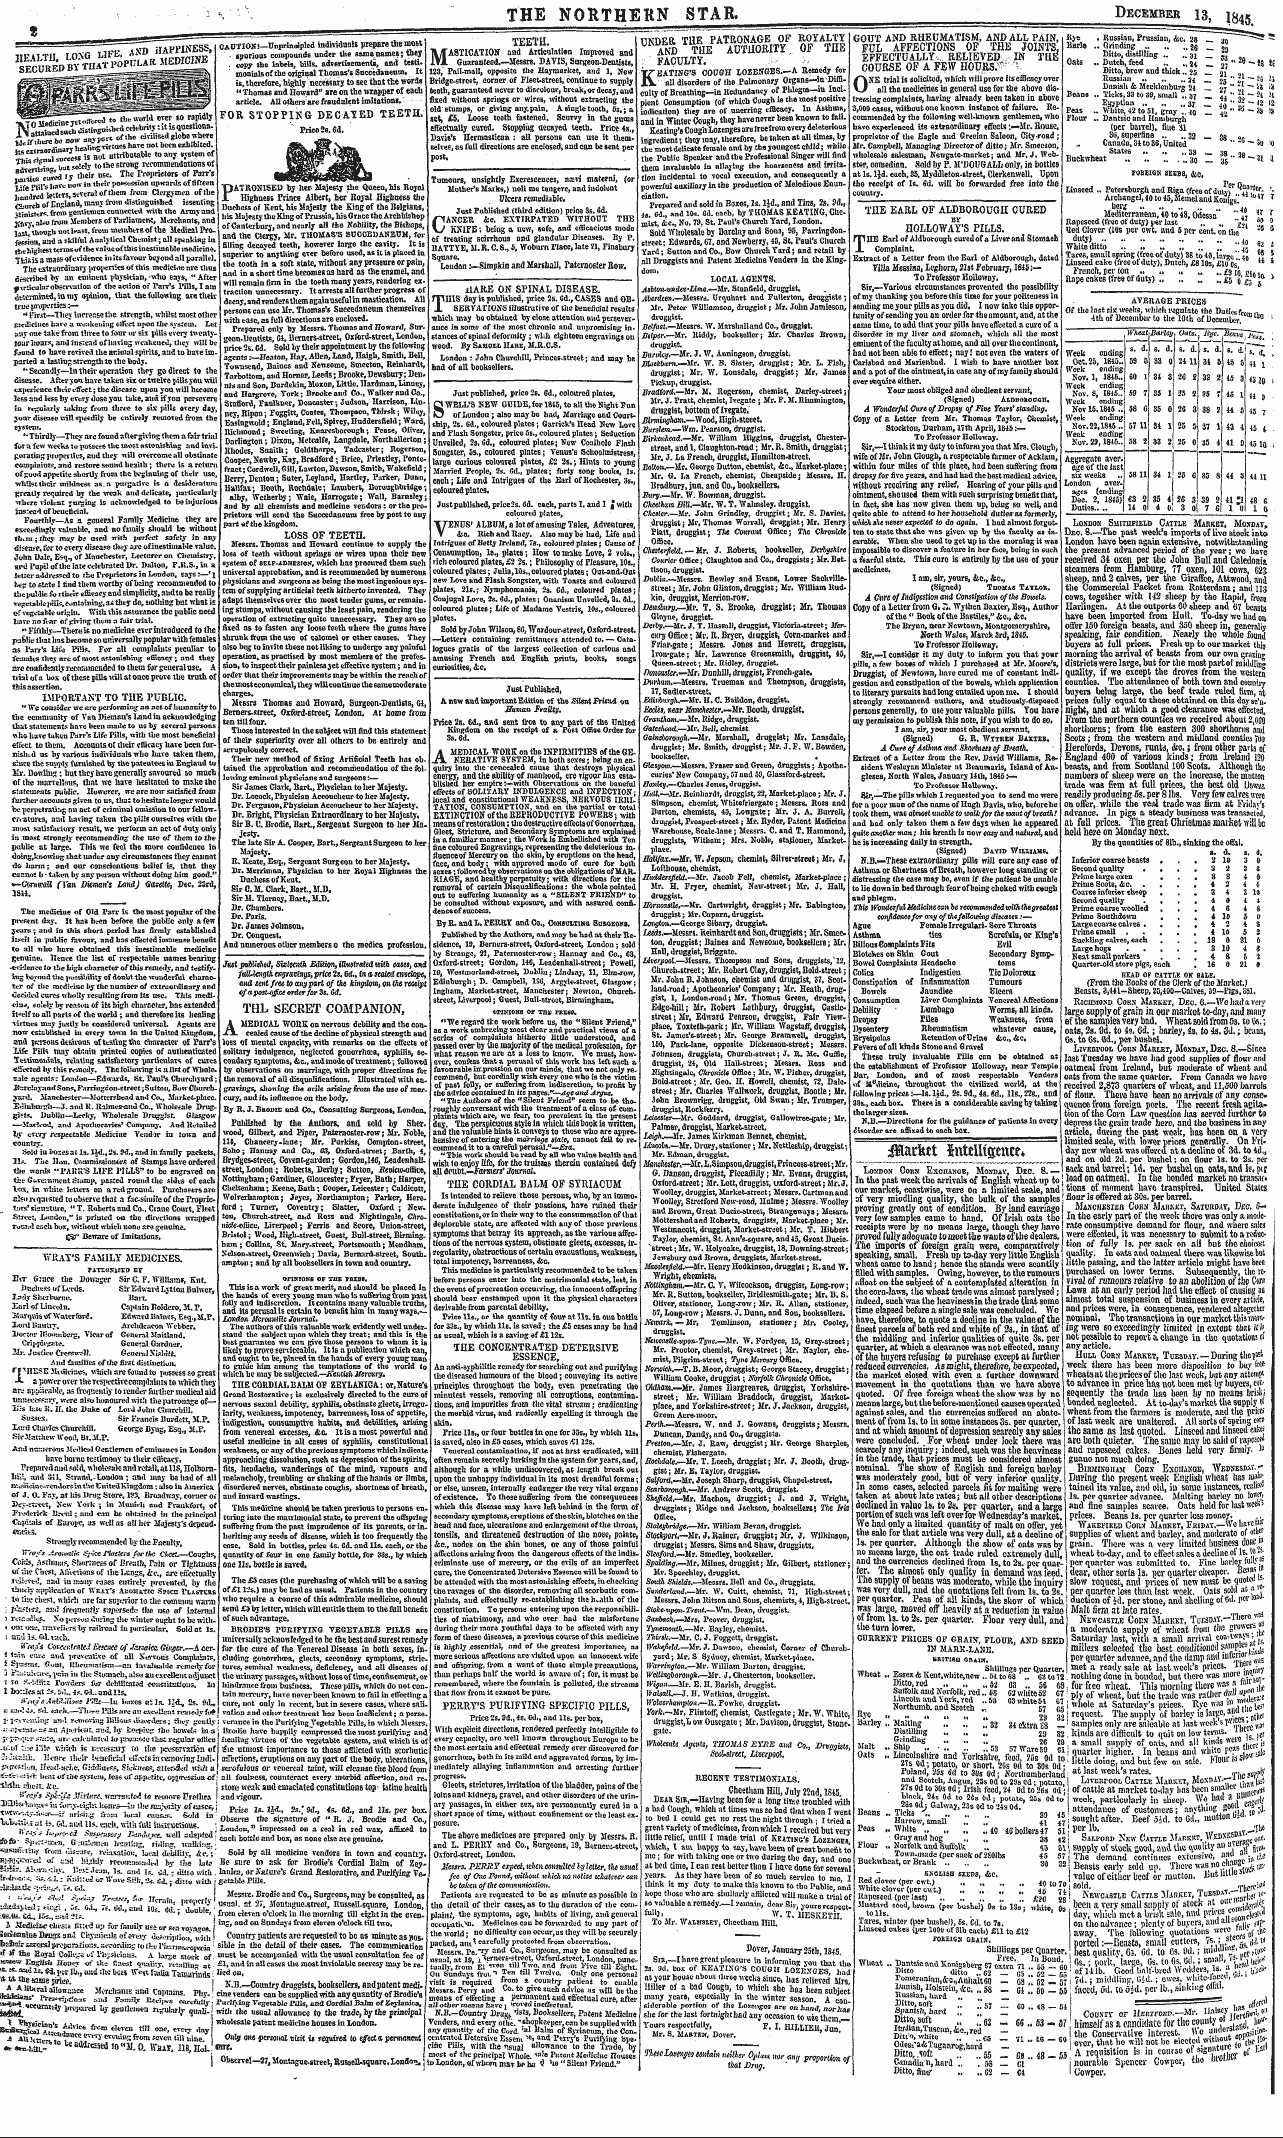 Northern Star (1837-1852): jS F Y, 3rd edition - Ad00213